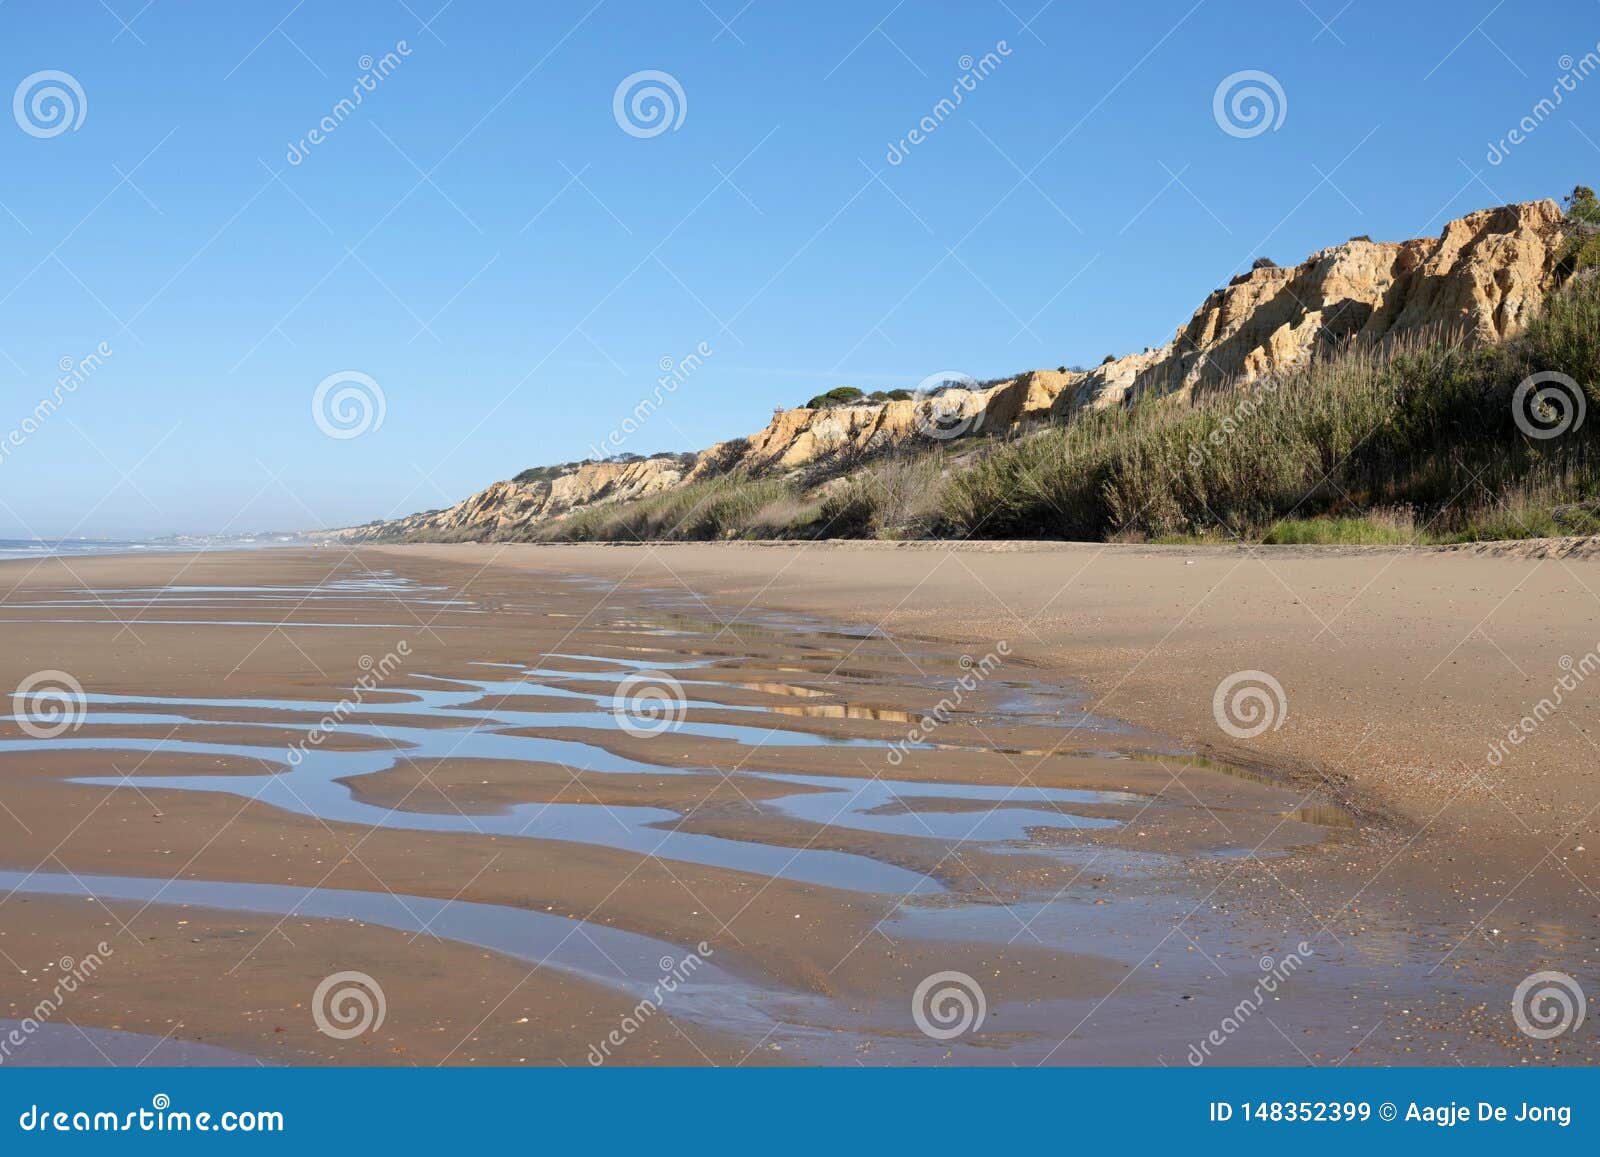 dunes of playa de rompeculos beach in mazagon, spain